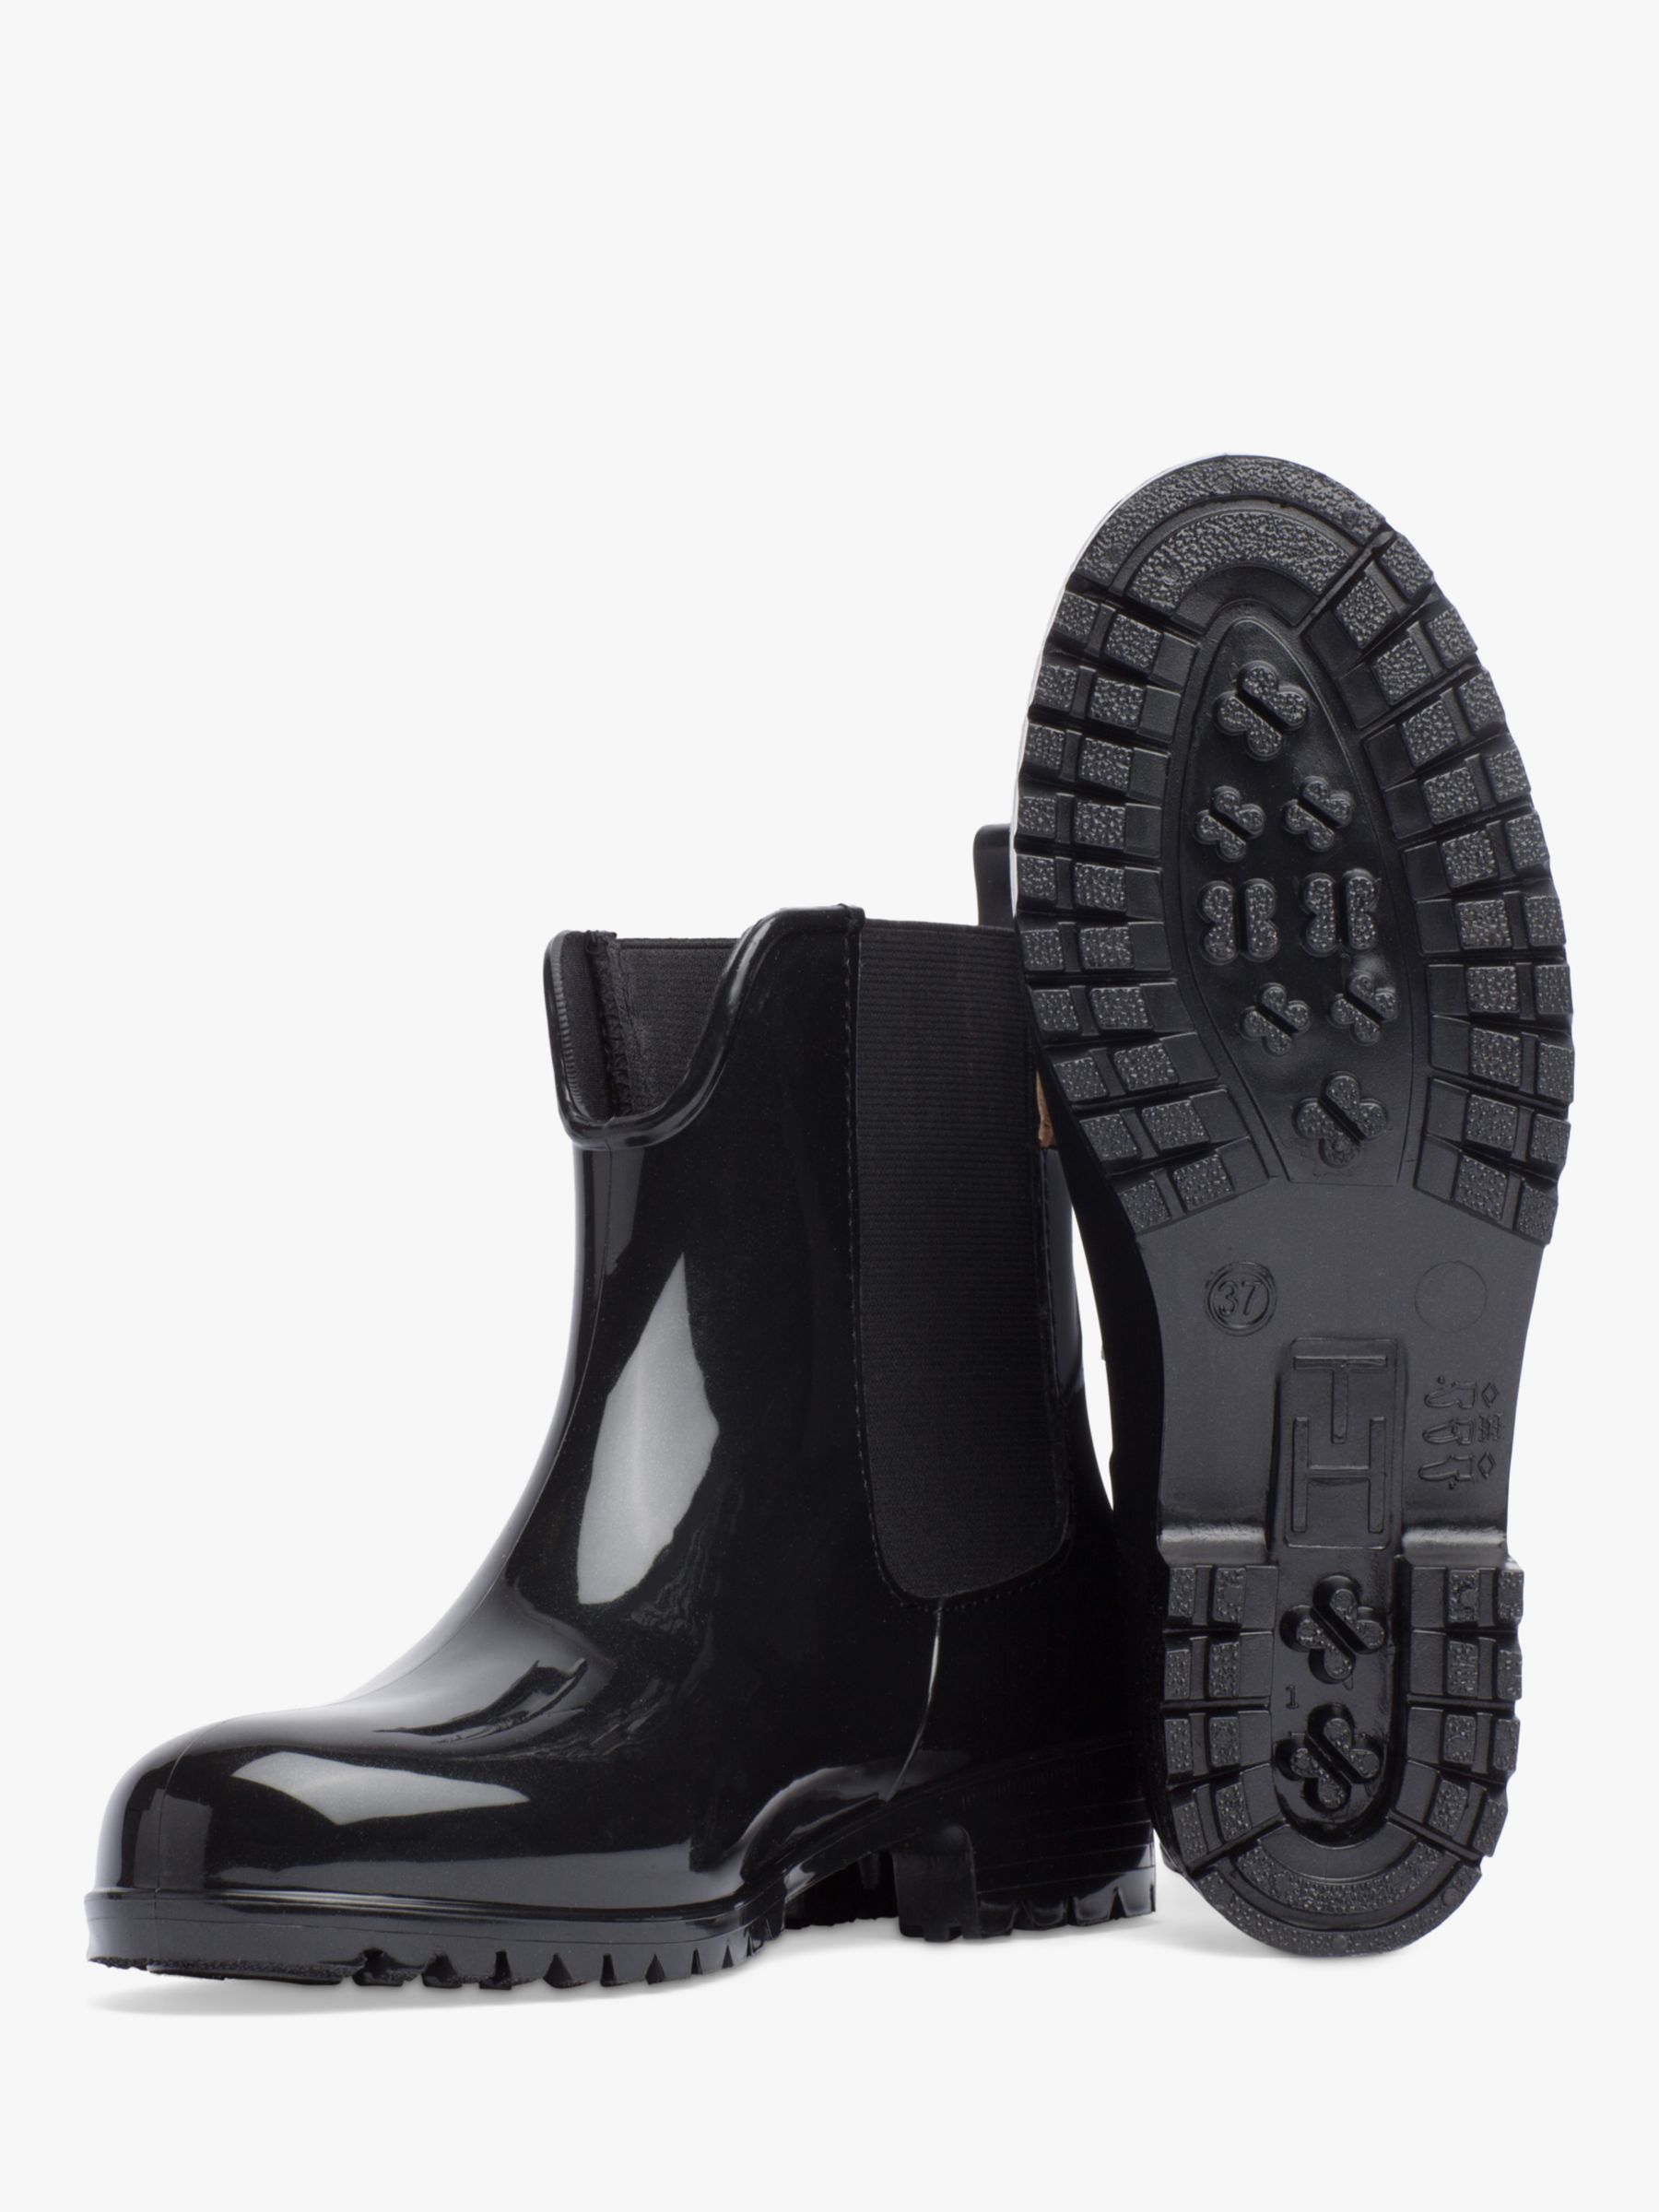 Tommy Hilfiger Buckled Ankle Boots, Black/Cognac at John Lewis & Partners